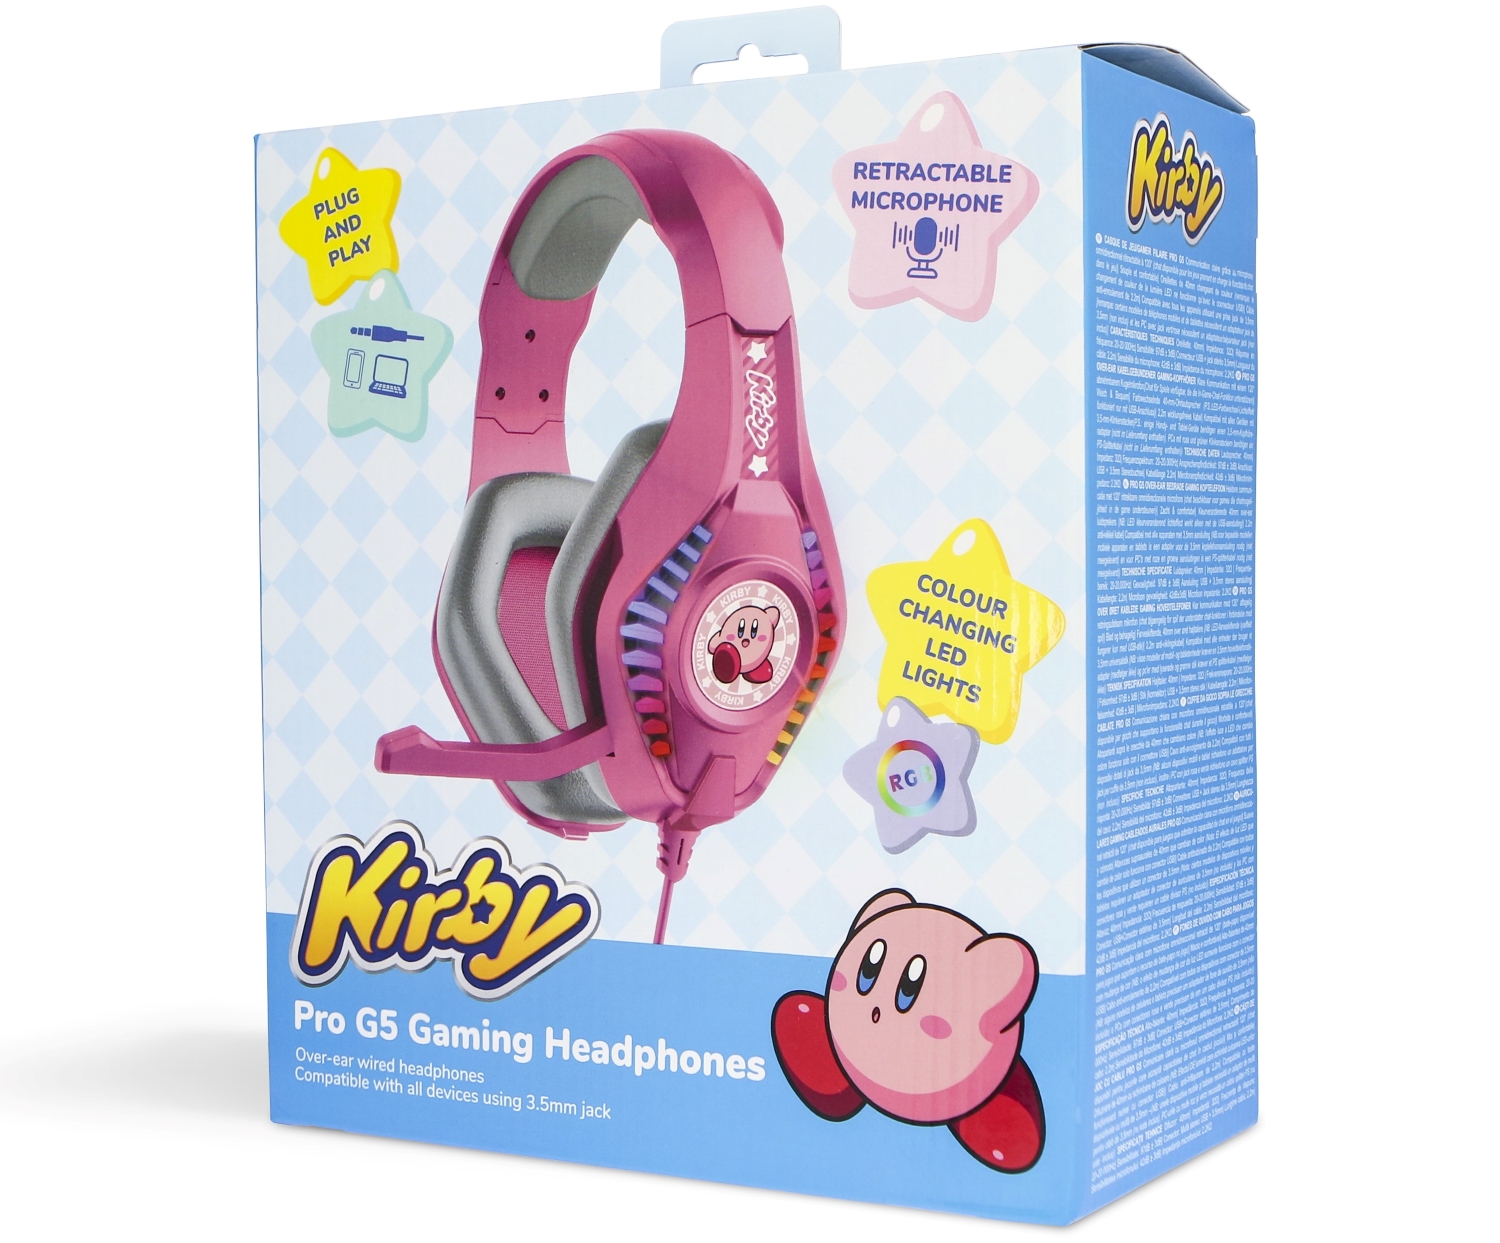  Children's headphones OTL Technologies Pro G5 Nintendo Kirby Pink